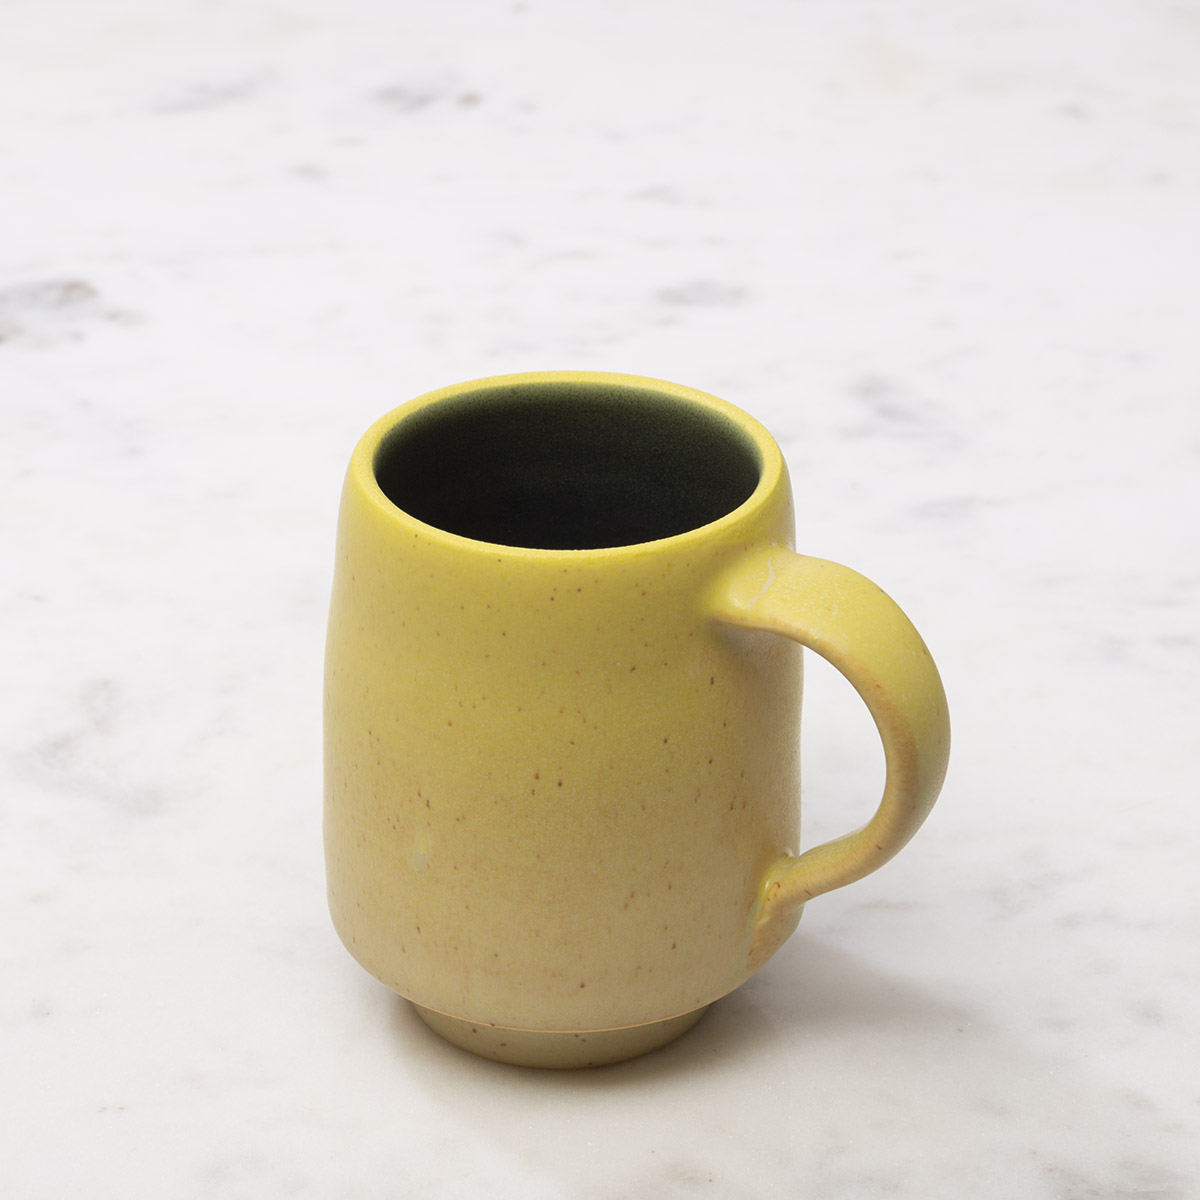 Handmade Ceramic Mug - Small Size